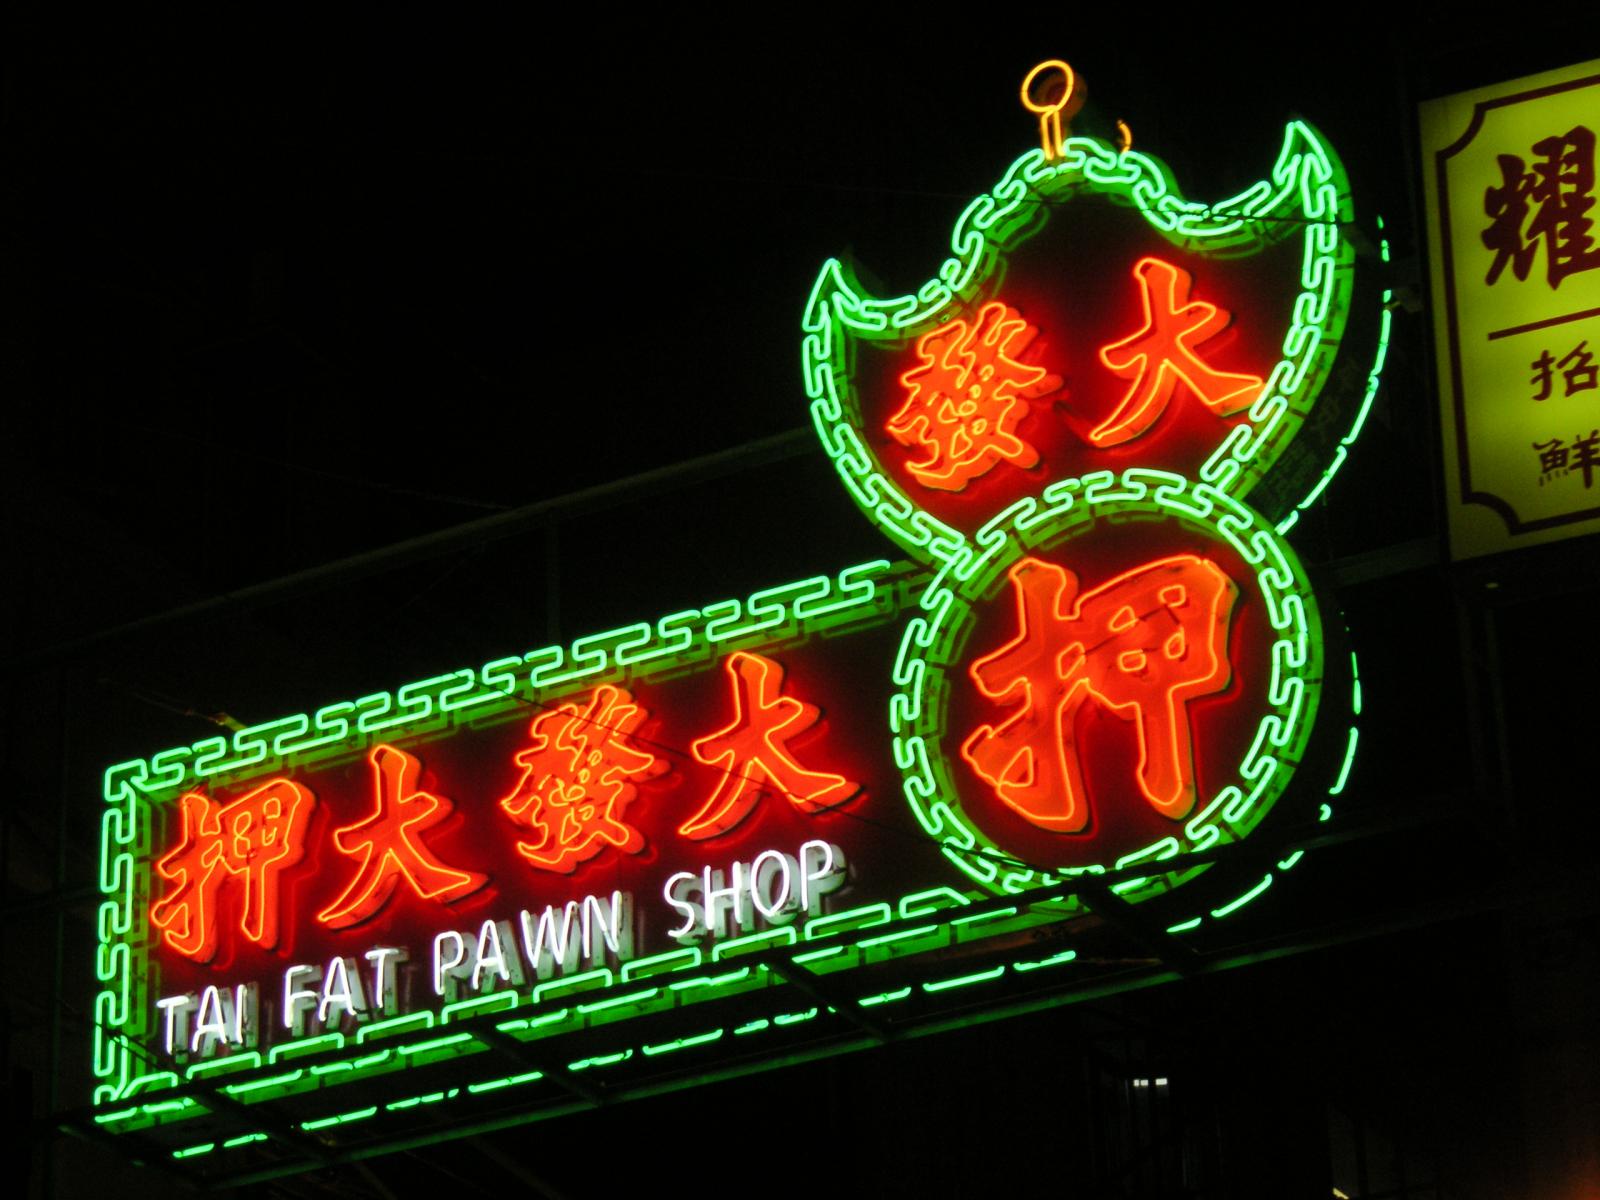 Tai Fat Pawn Shop sign